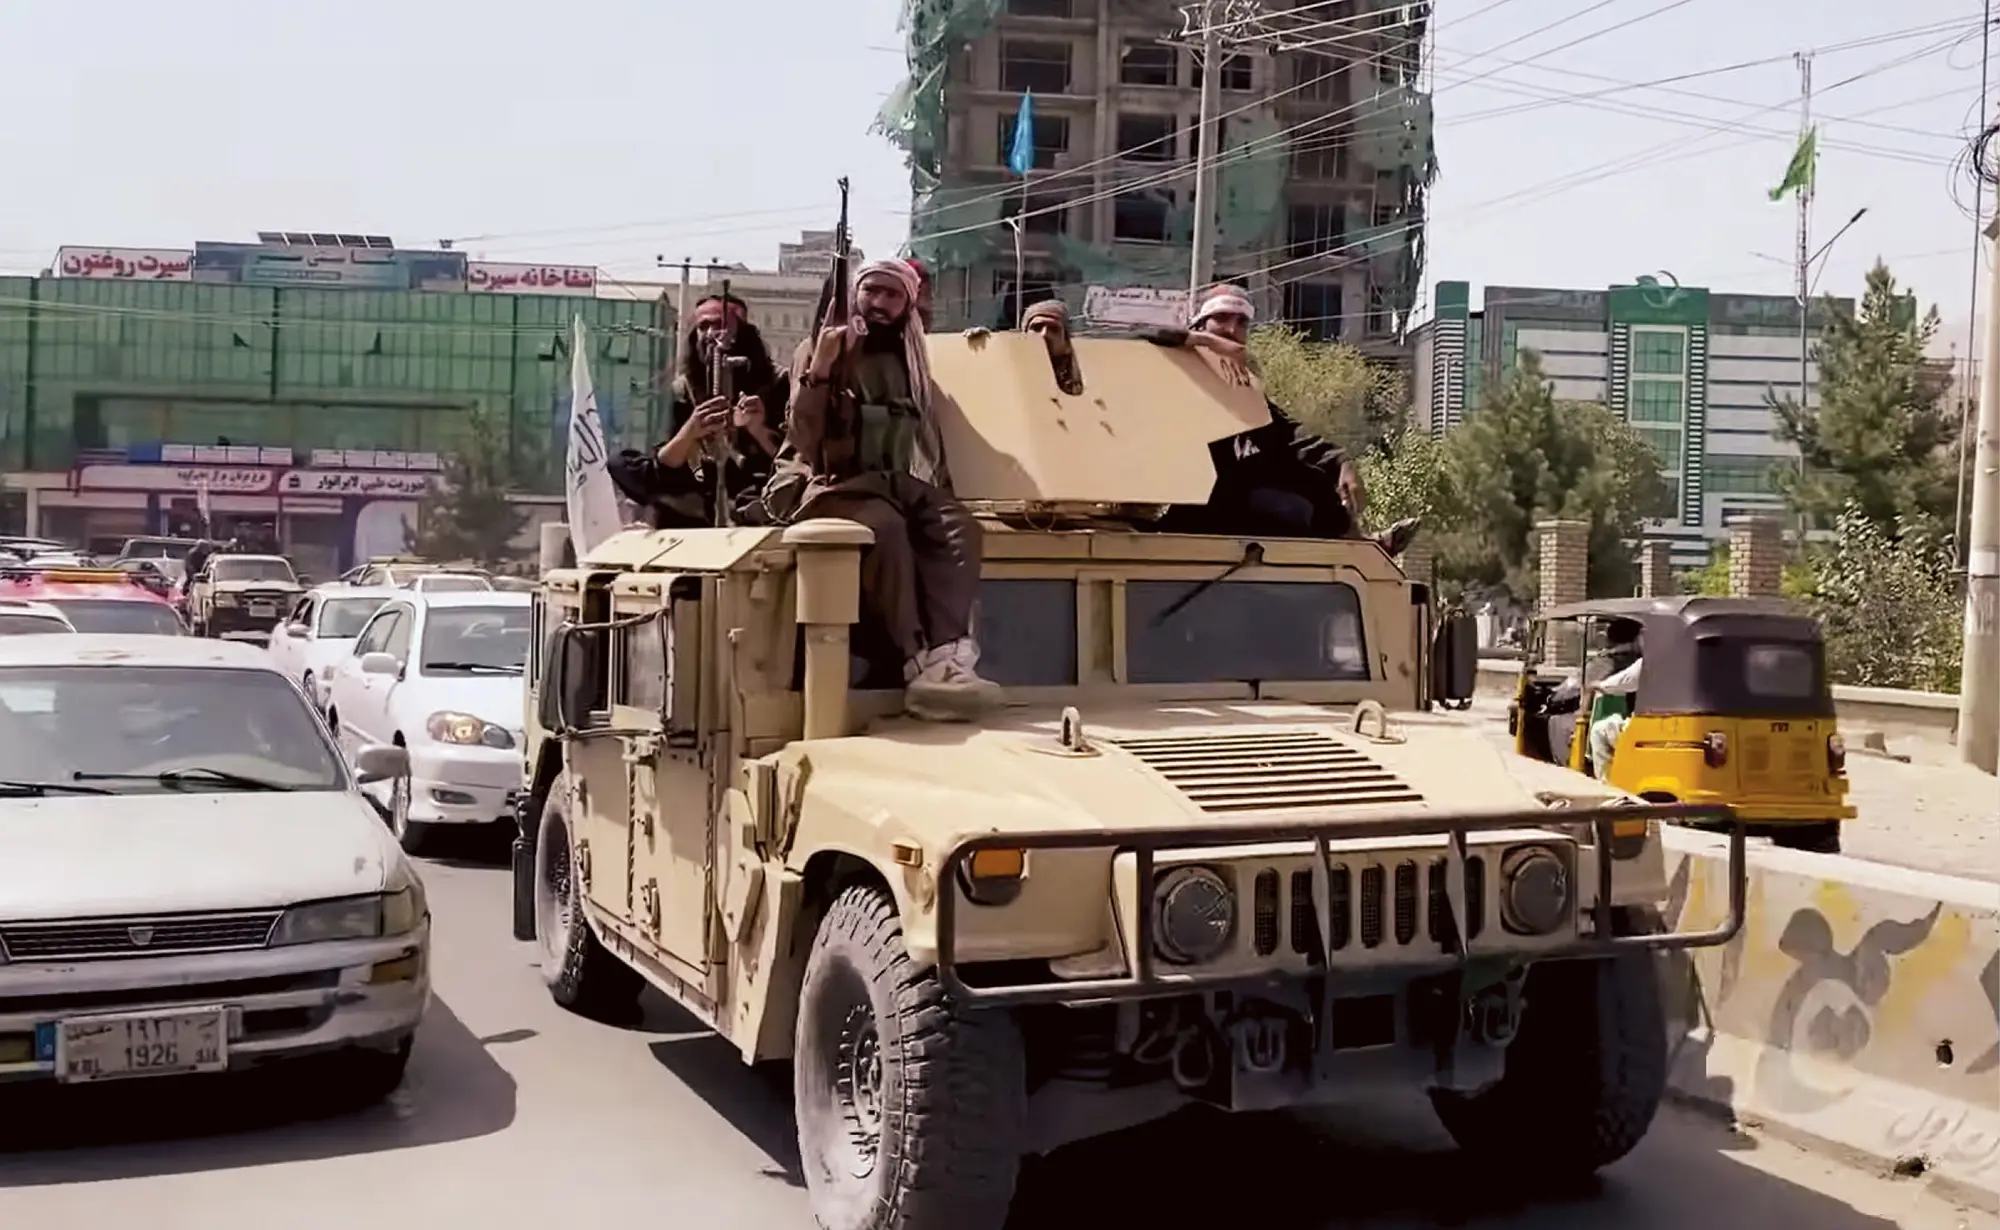 Armed Taliban militia patrolling city in military vehicle